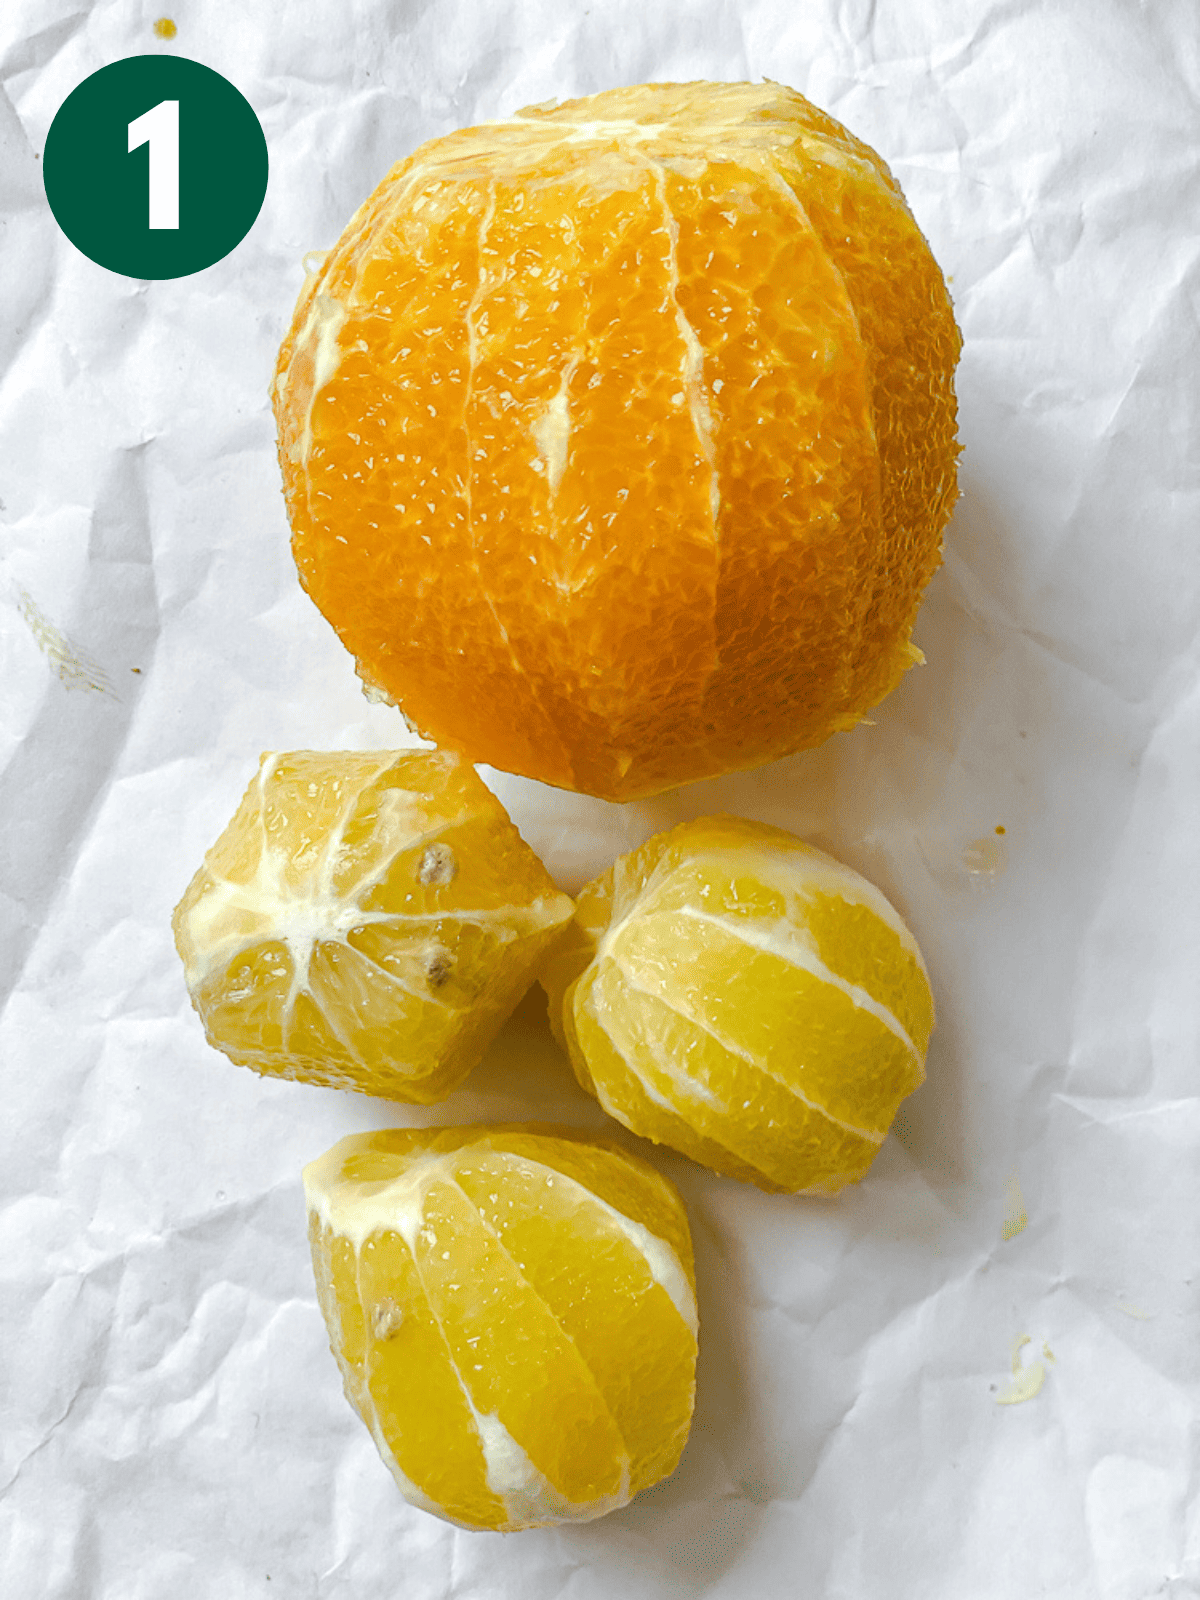 process shot showing peeled lemons and oranges